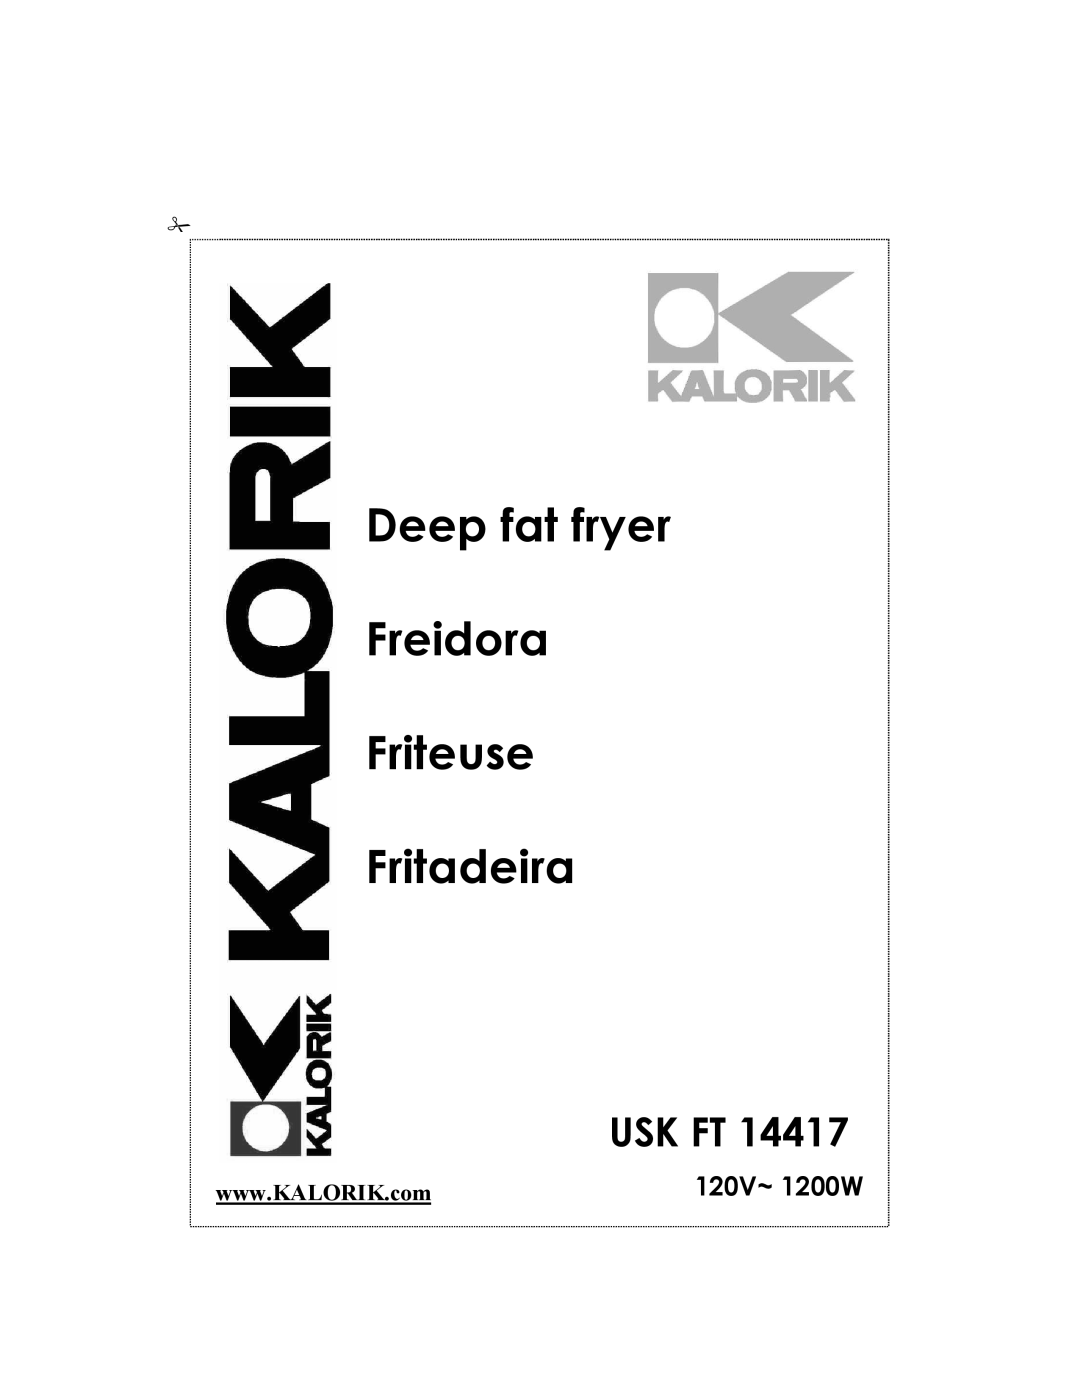 Kalorik USK FT 14417 manual Usk Ft, 120V~ 1200W, Deep fat fryer Freidora Friteuse Fritadeira 